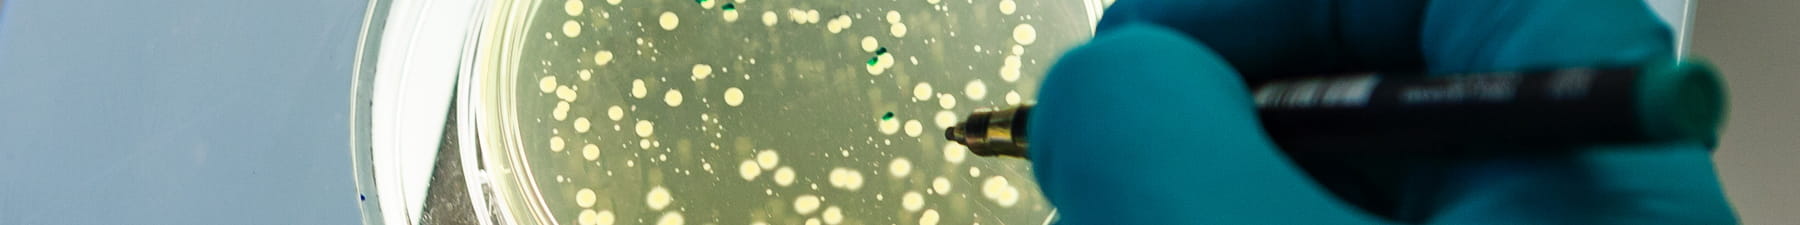 Petri dish plant health